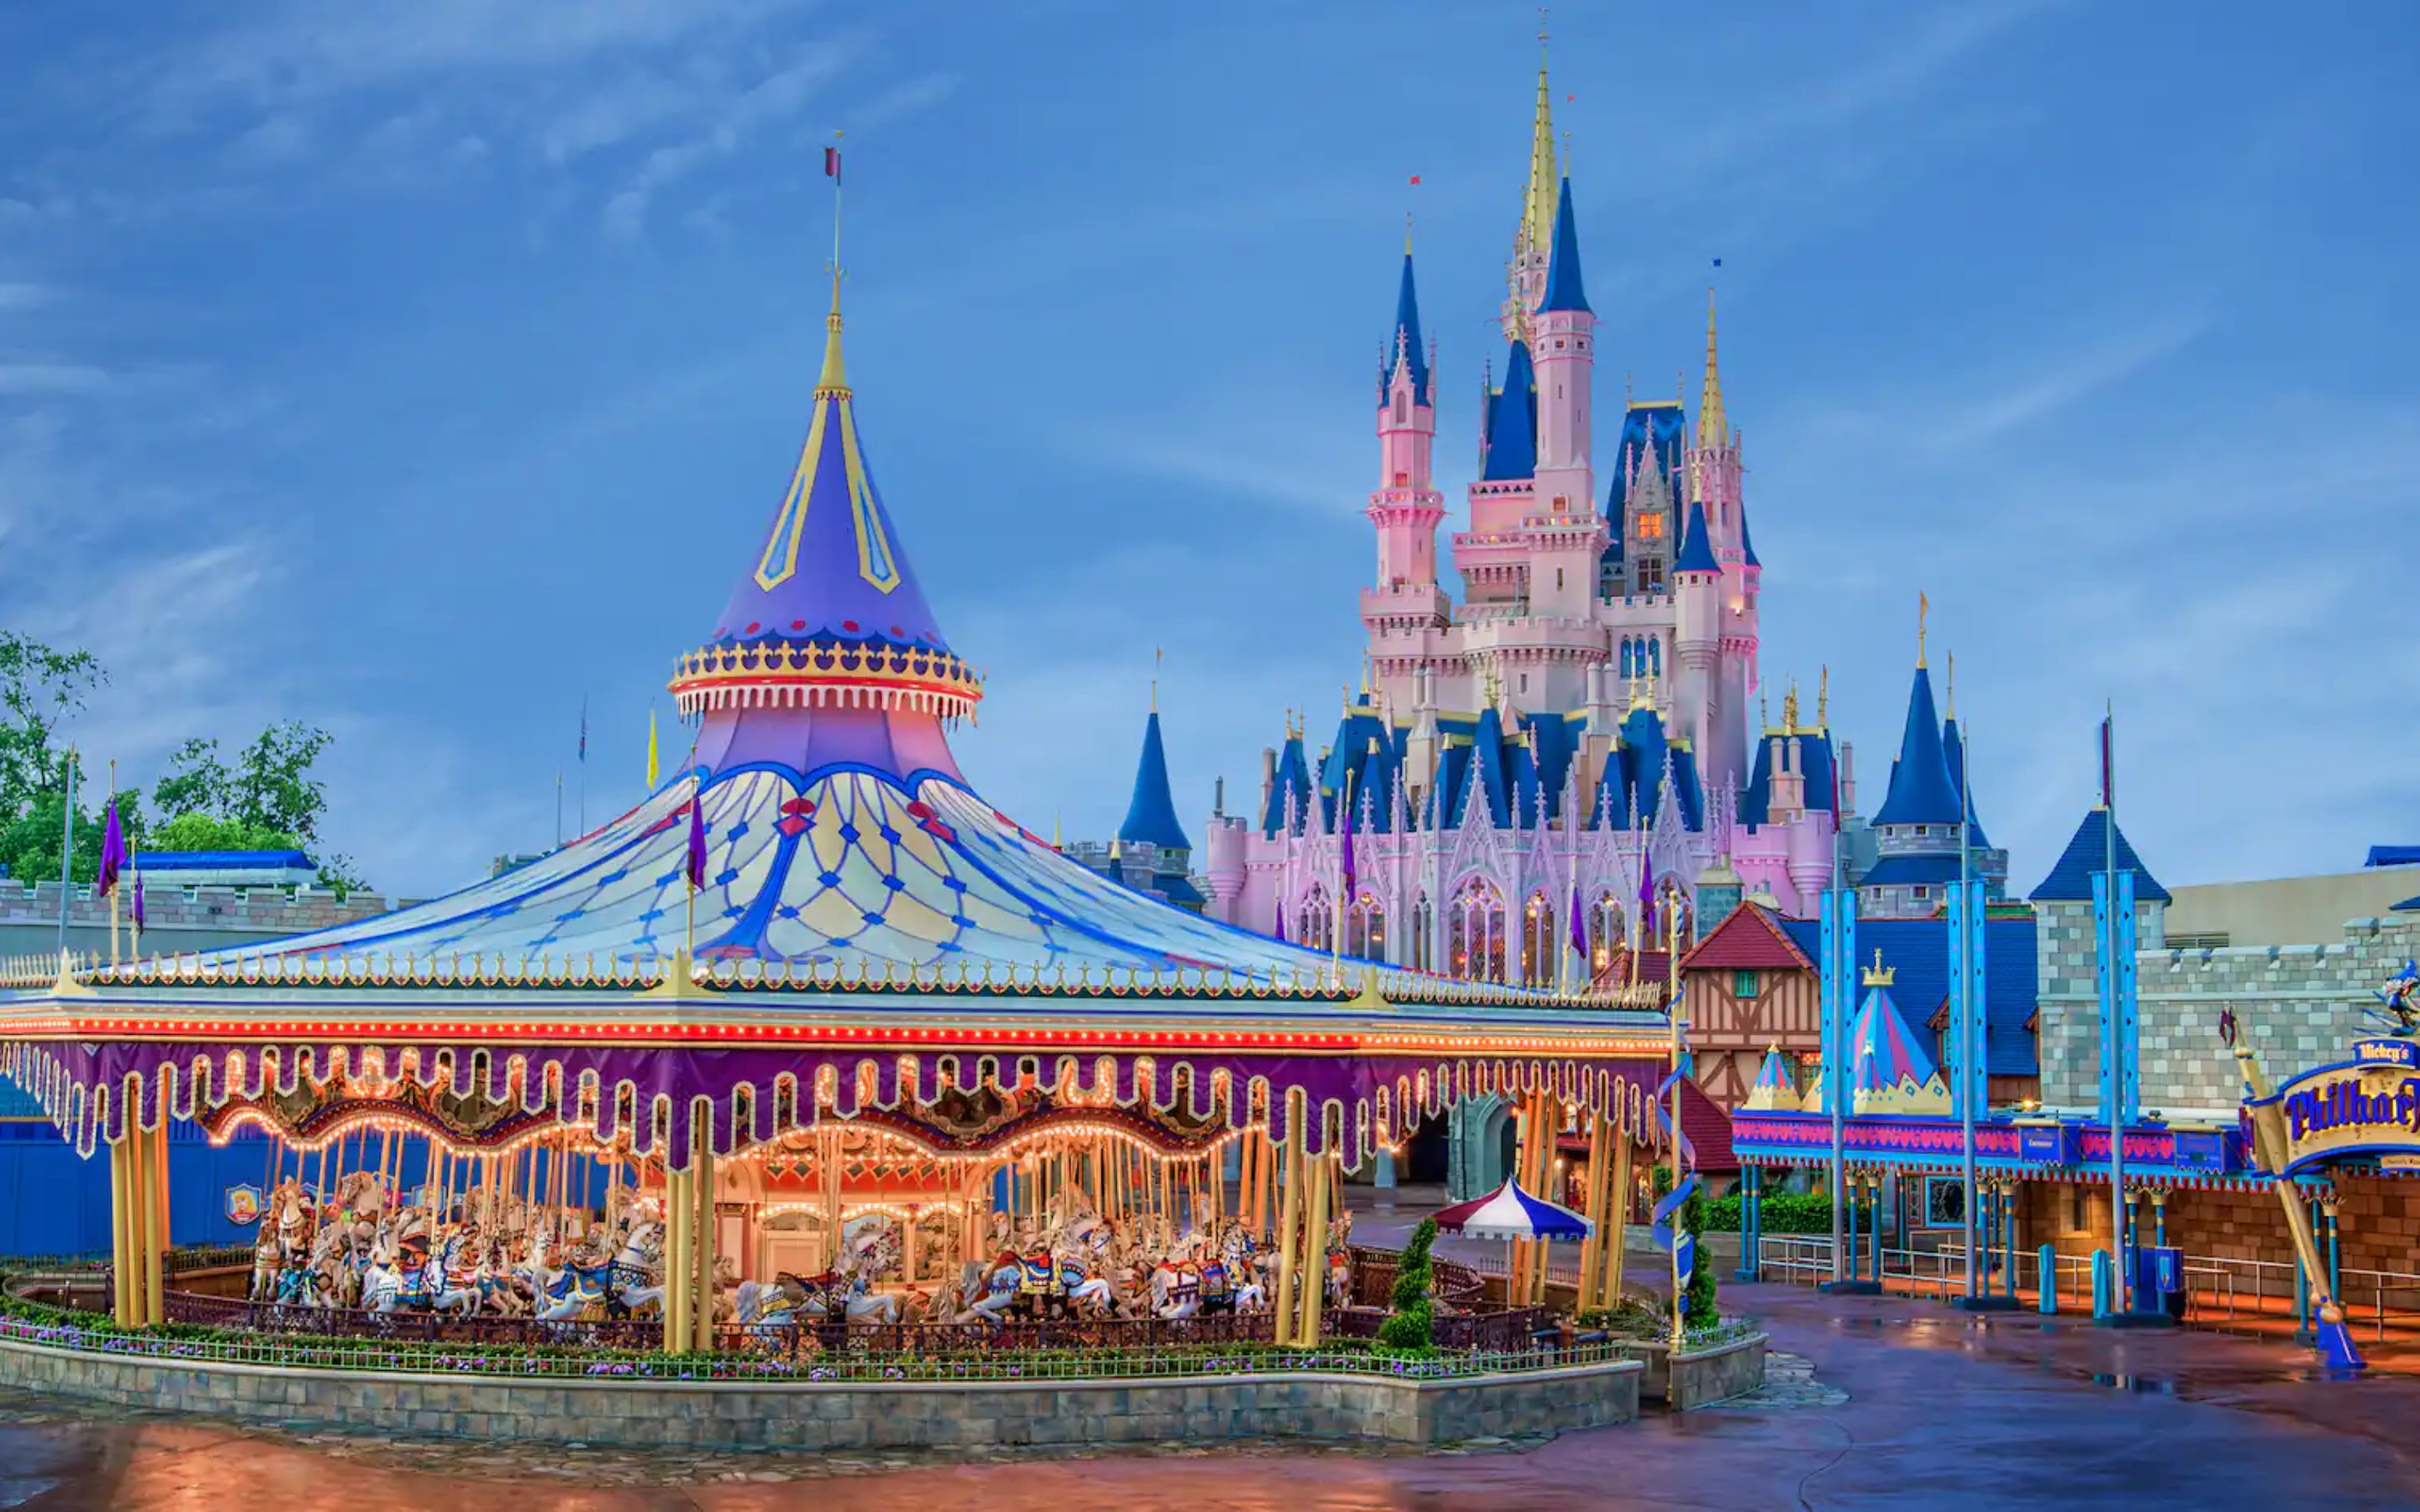 Prince Charming's Regal Carousel at Disney's Magic Kingdom